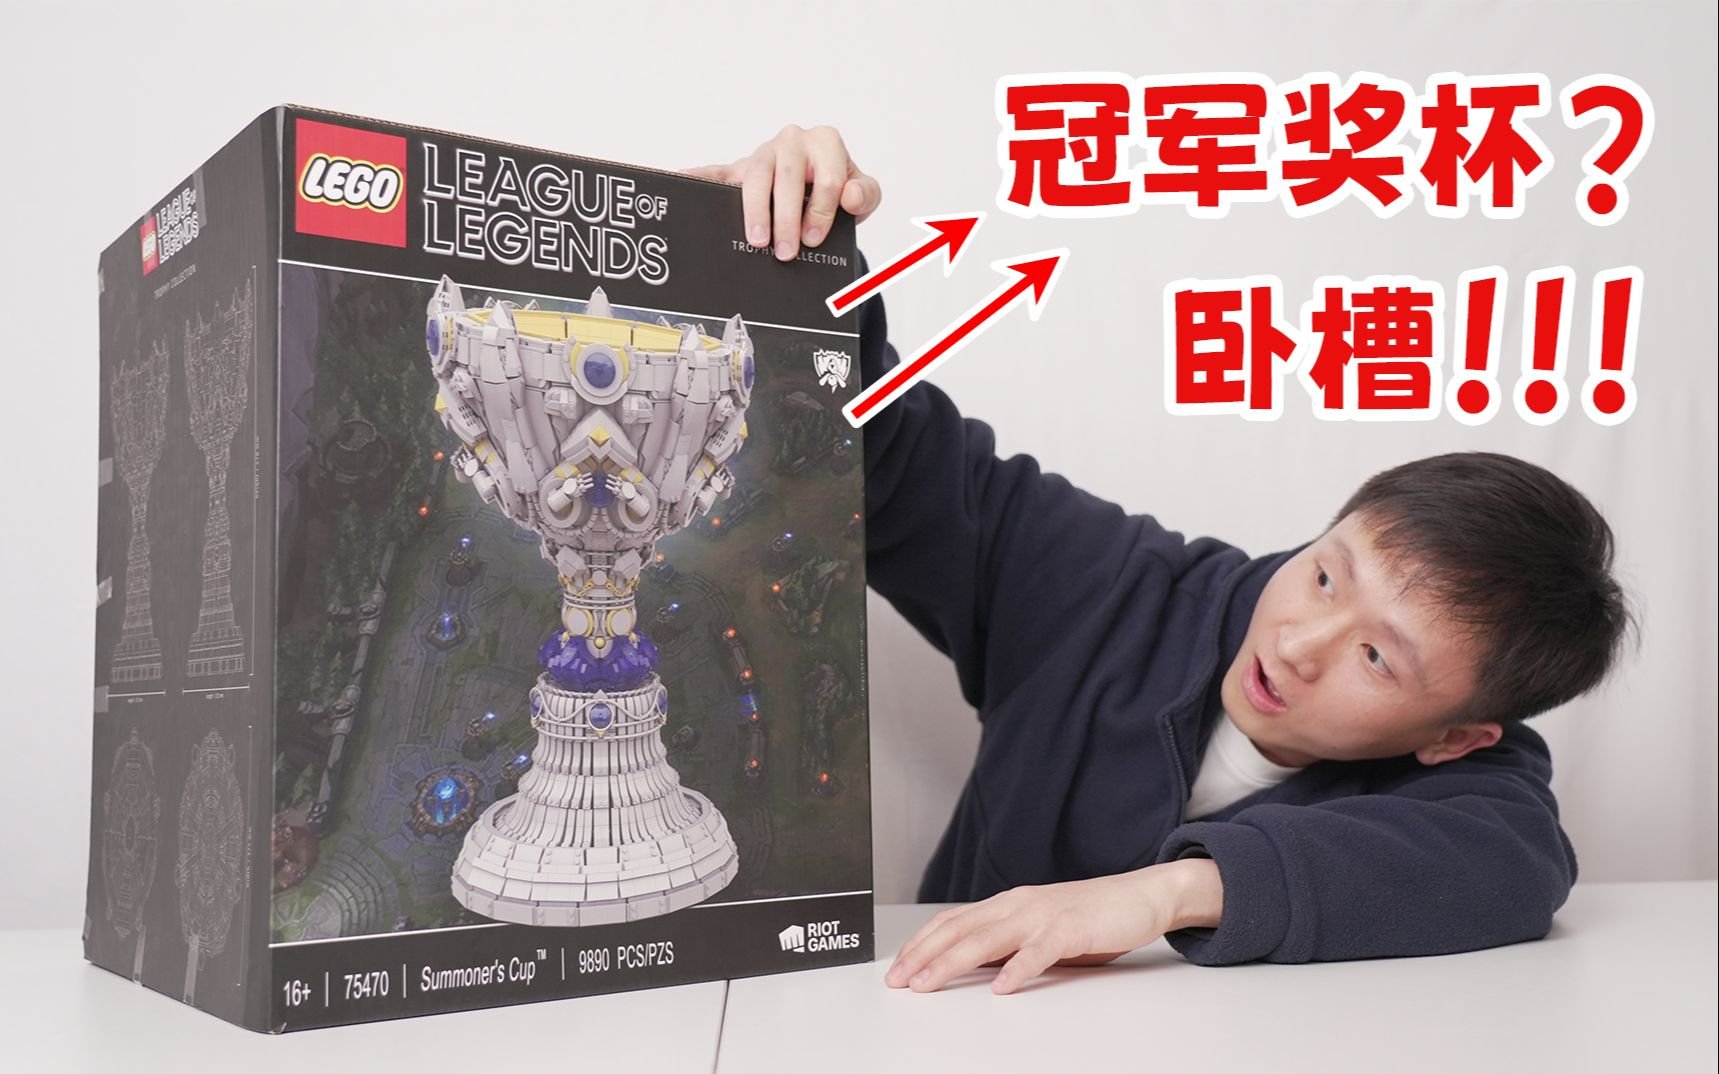 Jumaralo Hex on "Worlds Championship Old trophy Lego x League of Legends https://t.co/GTFM2SOFNr https://t.co/AHzwTEX6kt"